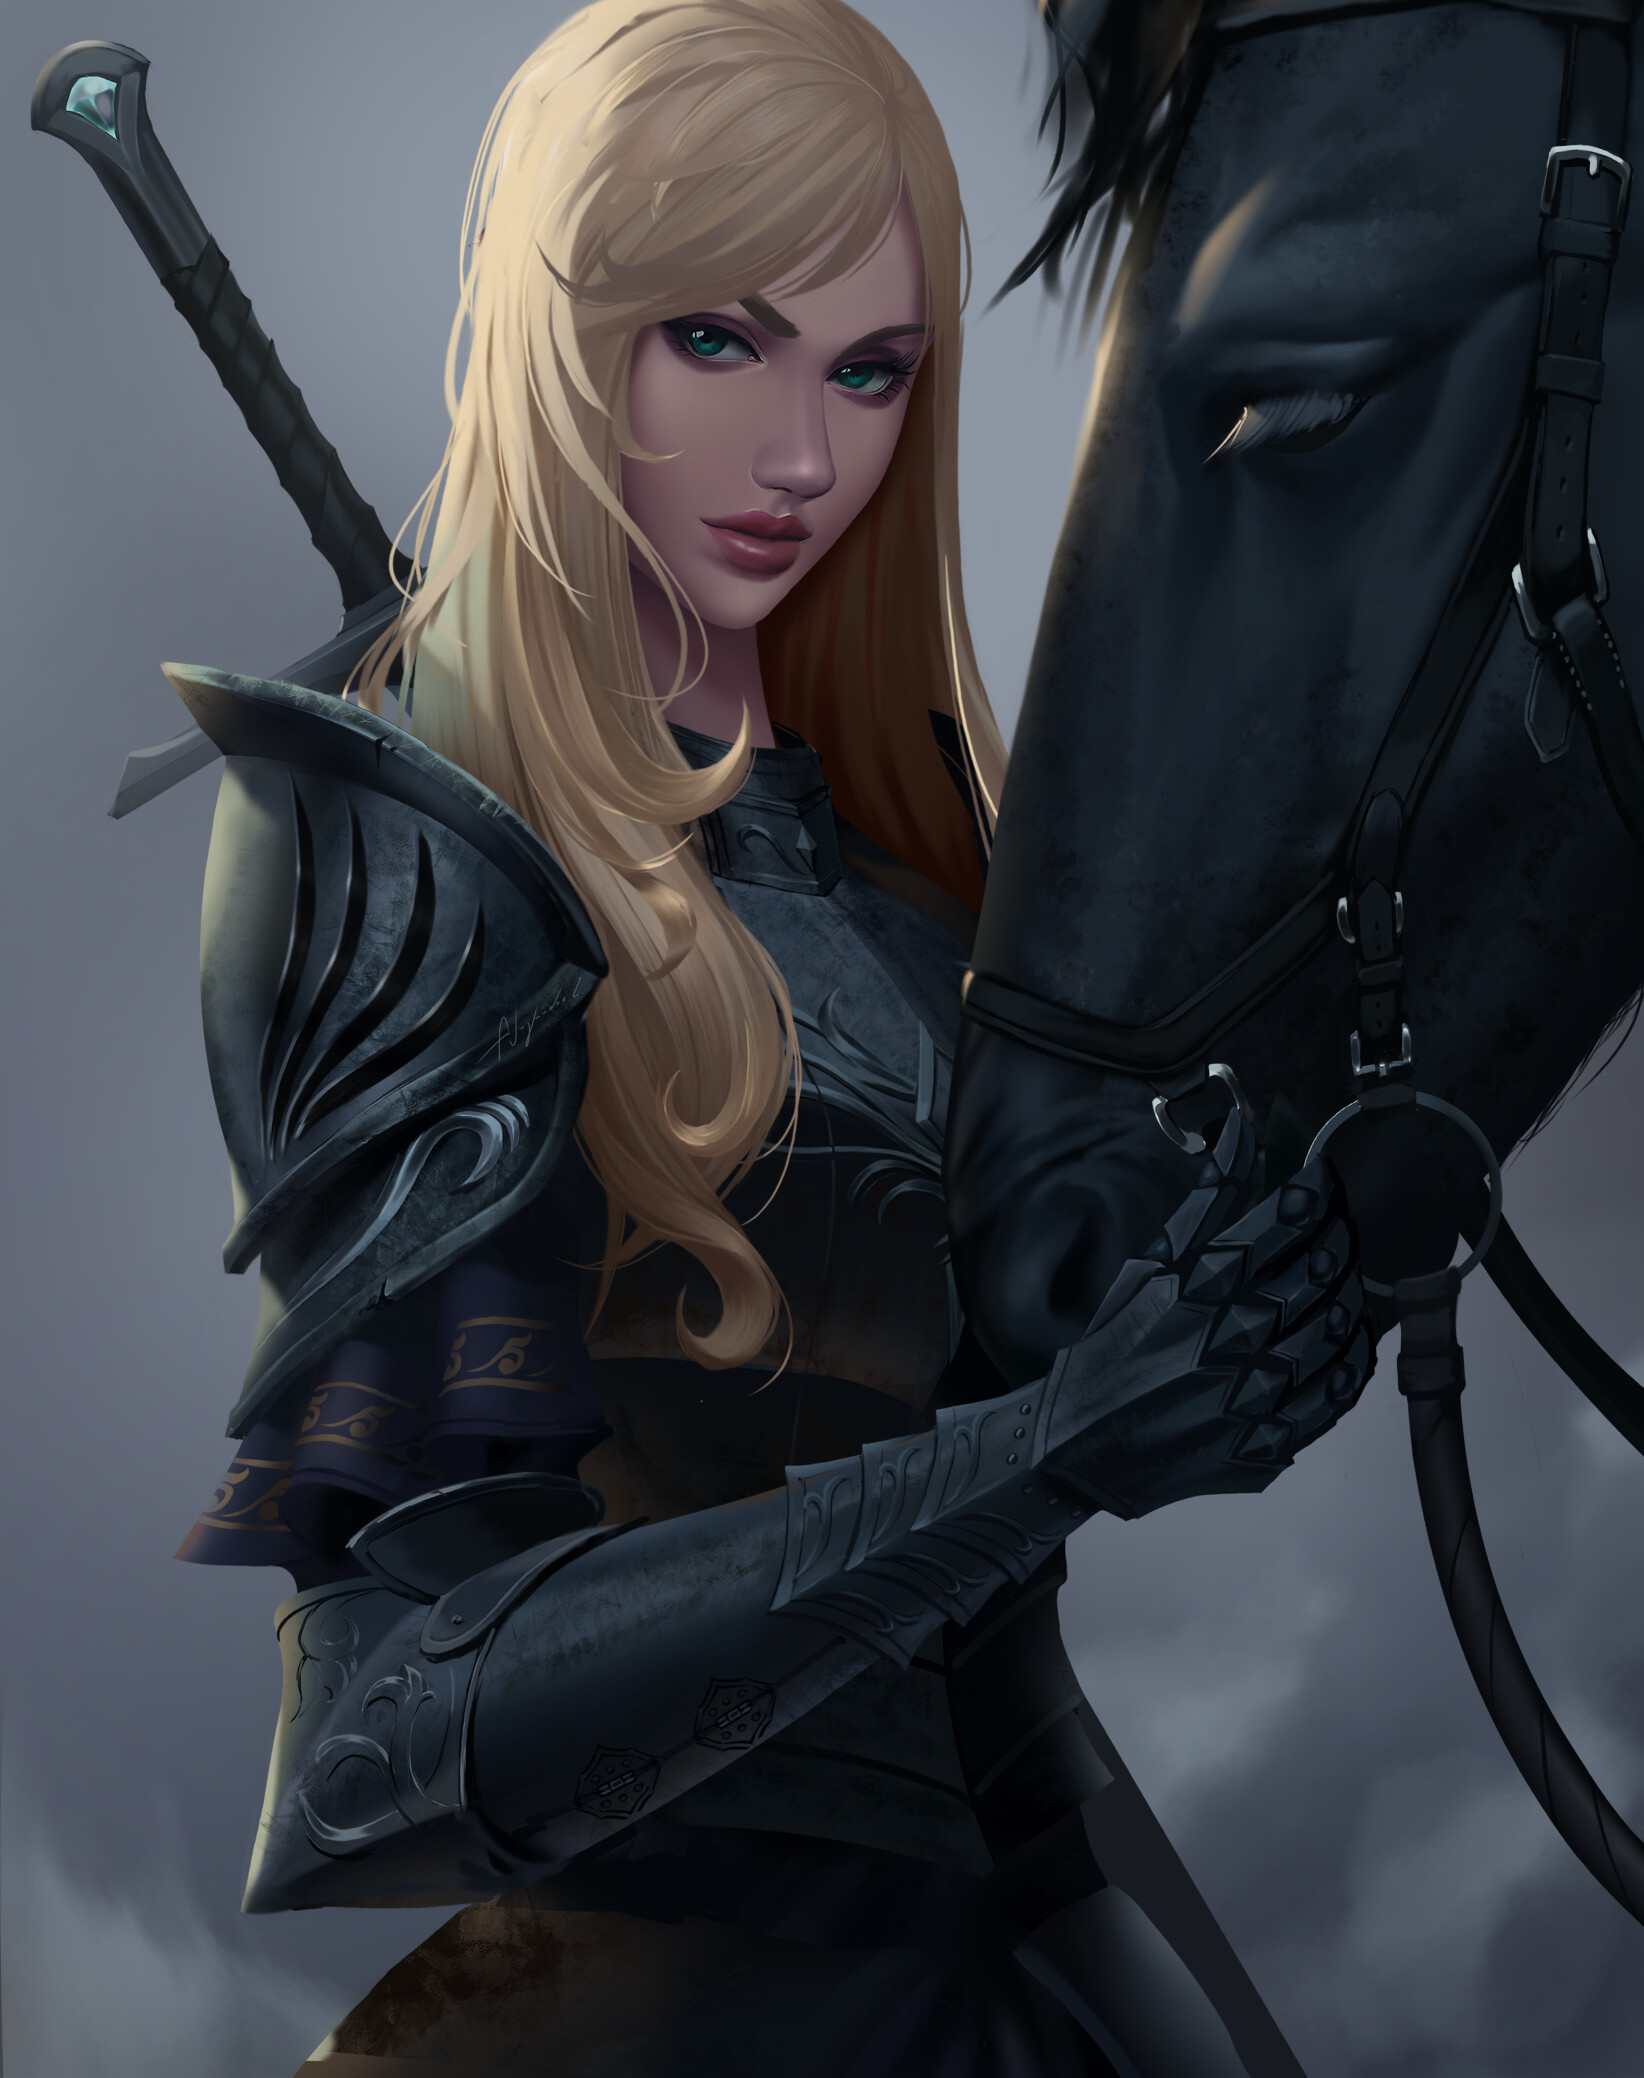 Lara And Horse